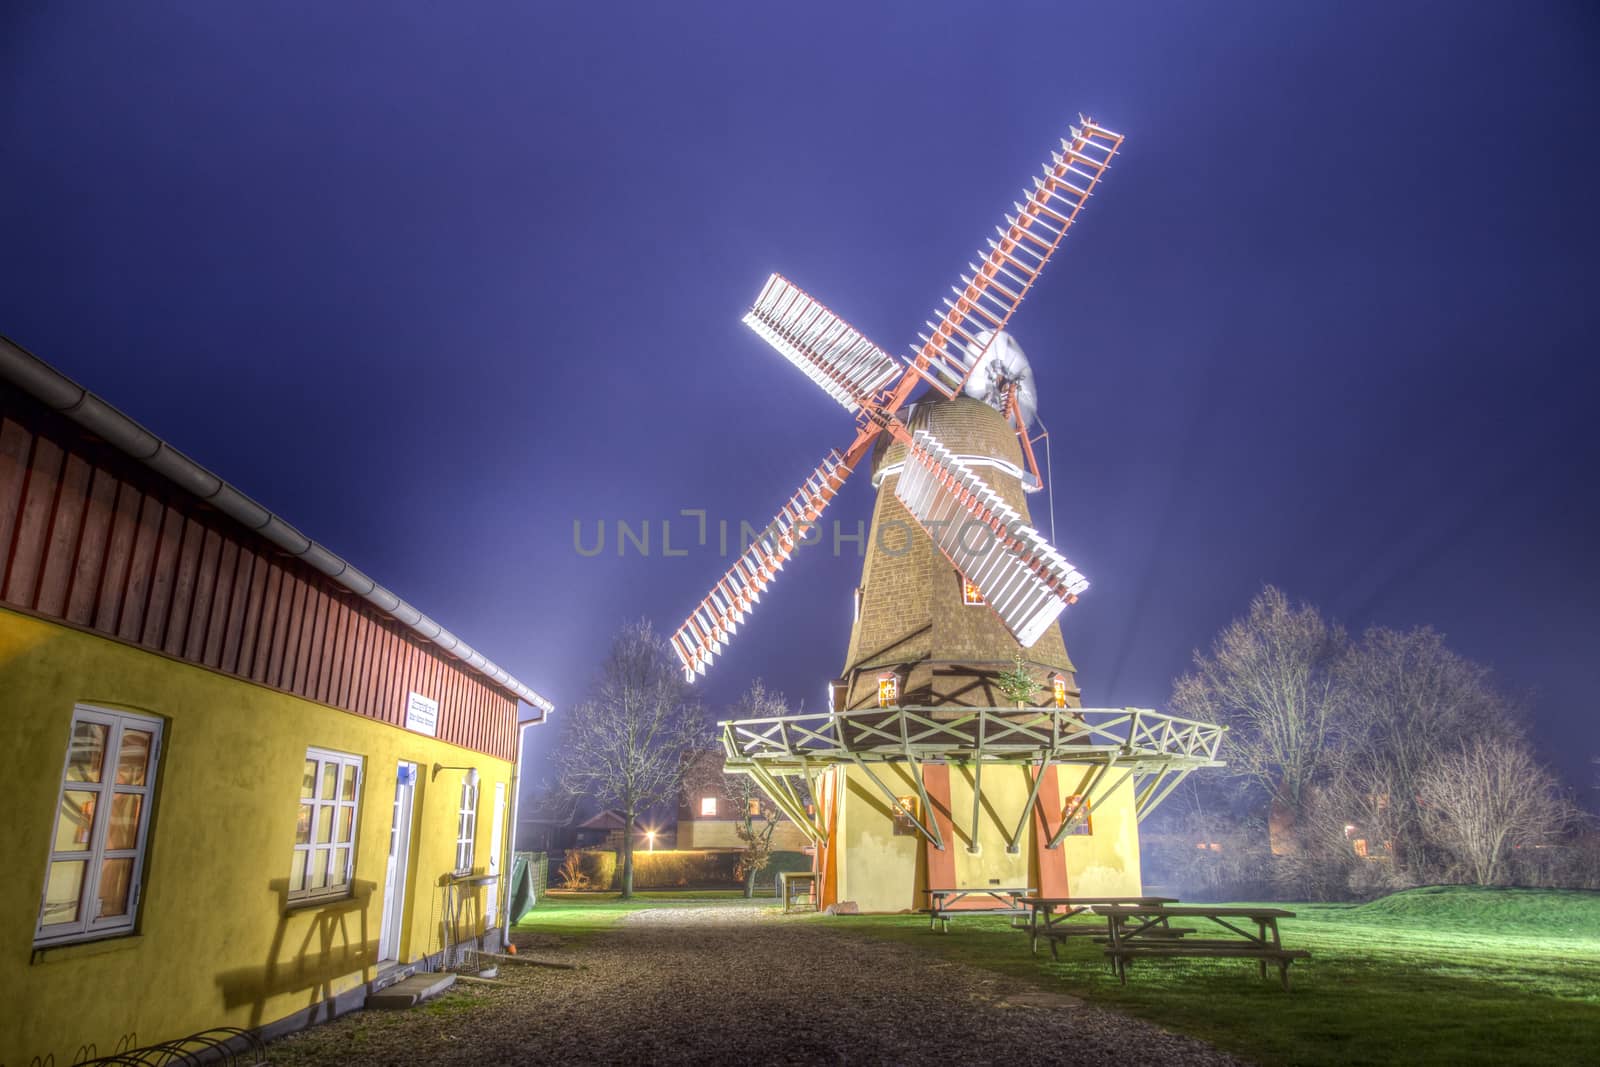 Ramloese, Denmark - December 30, 2016: HDR photo of an illuminated historic Danish windmill